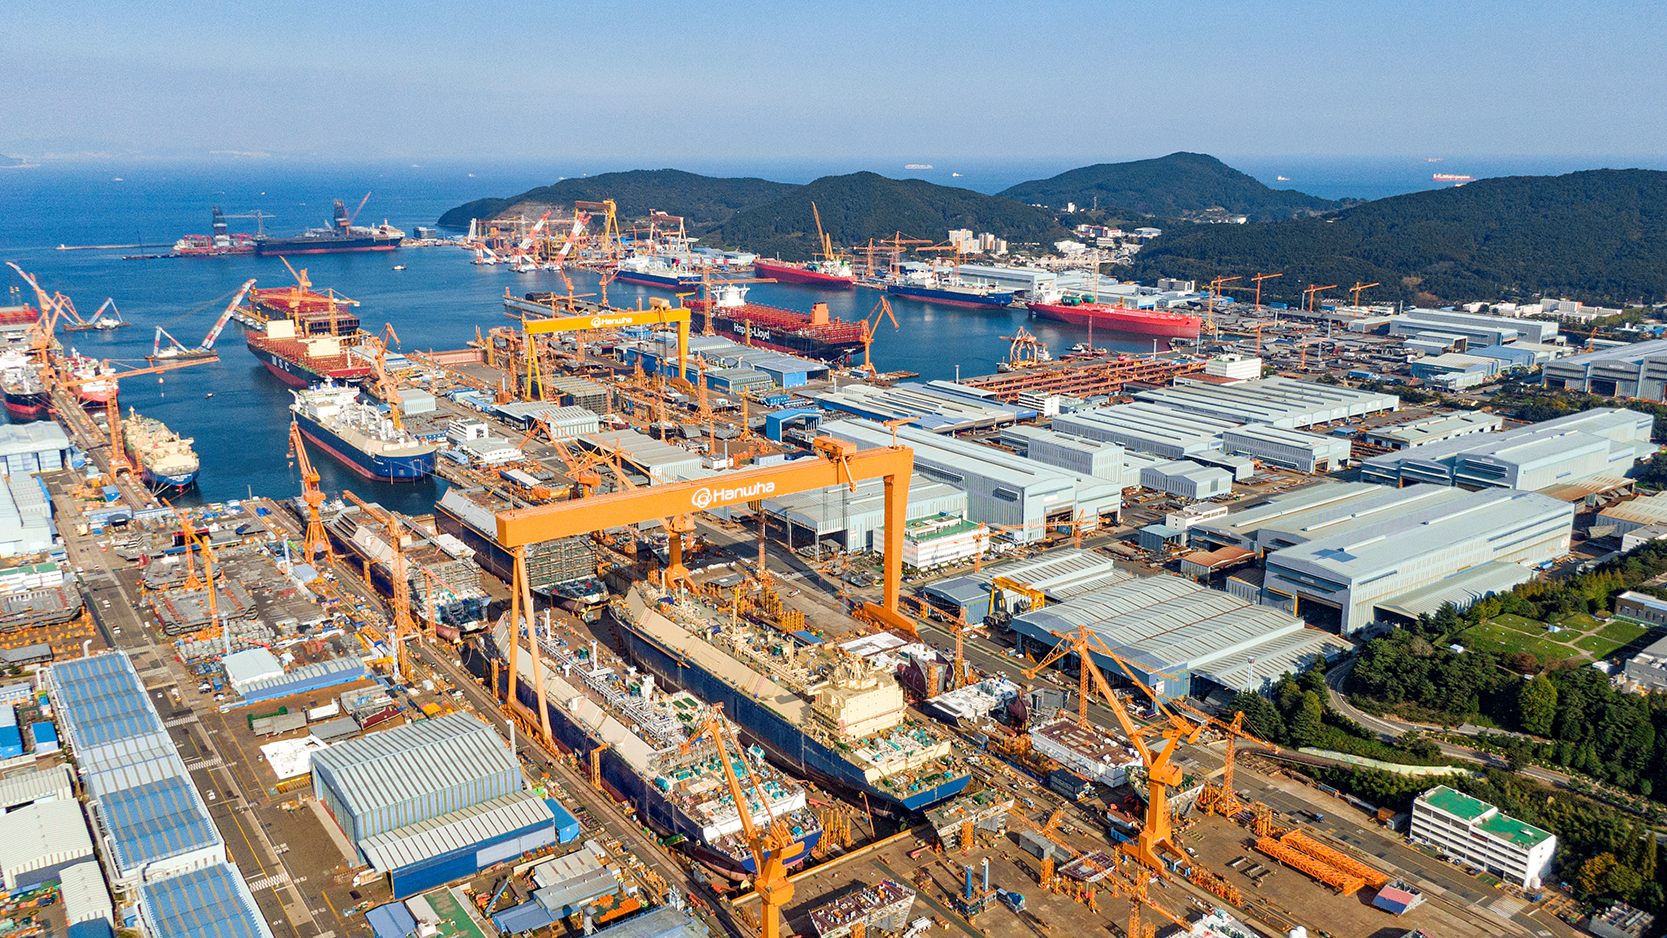 Work is underway at Hanwha’s Geoje shipyard, on Korea’s southeastern coast.